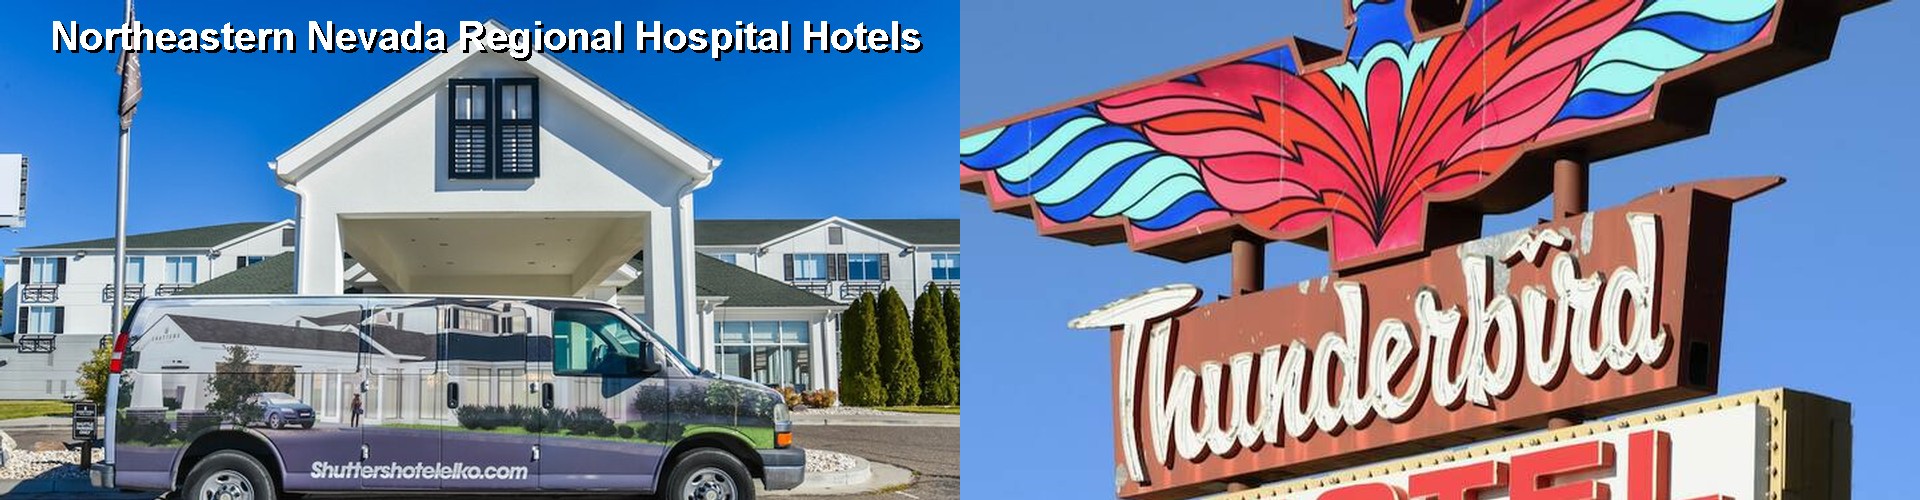 5 Best Hotels near Northeastern Nevada Regional Hospital